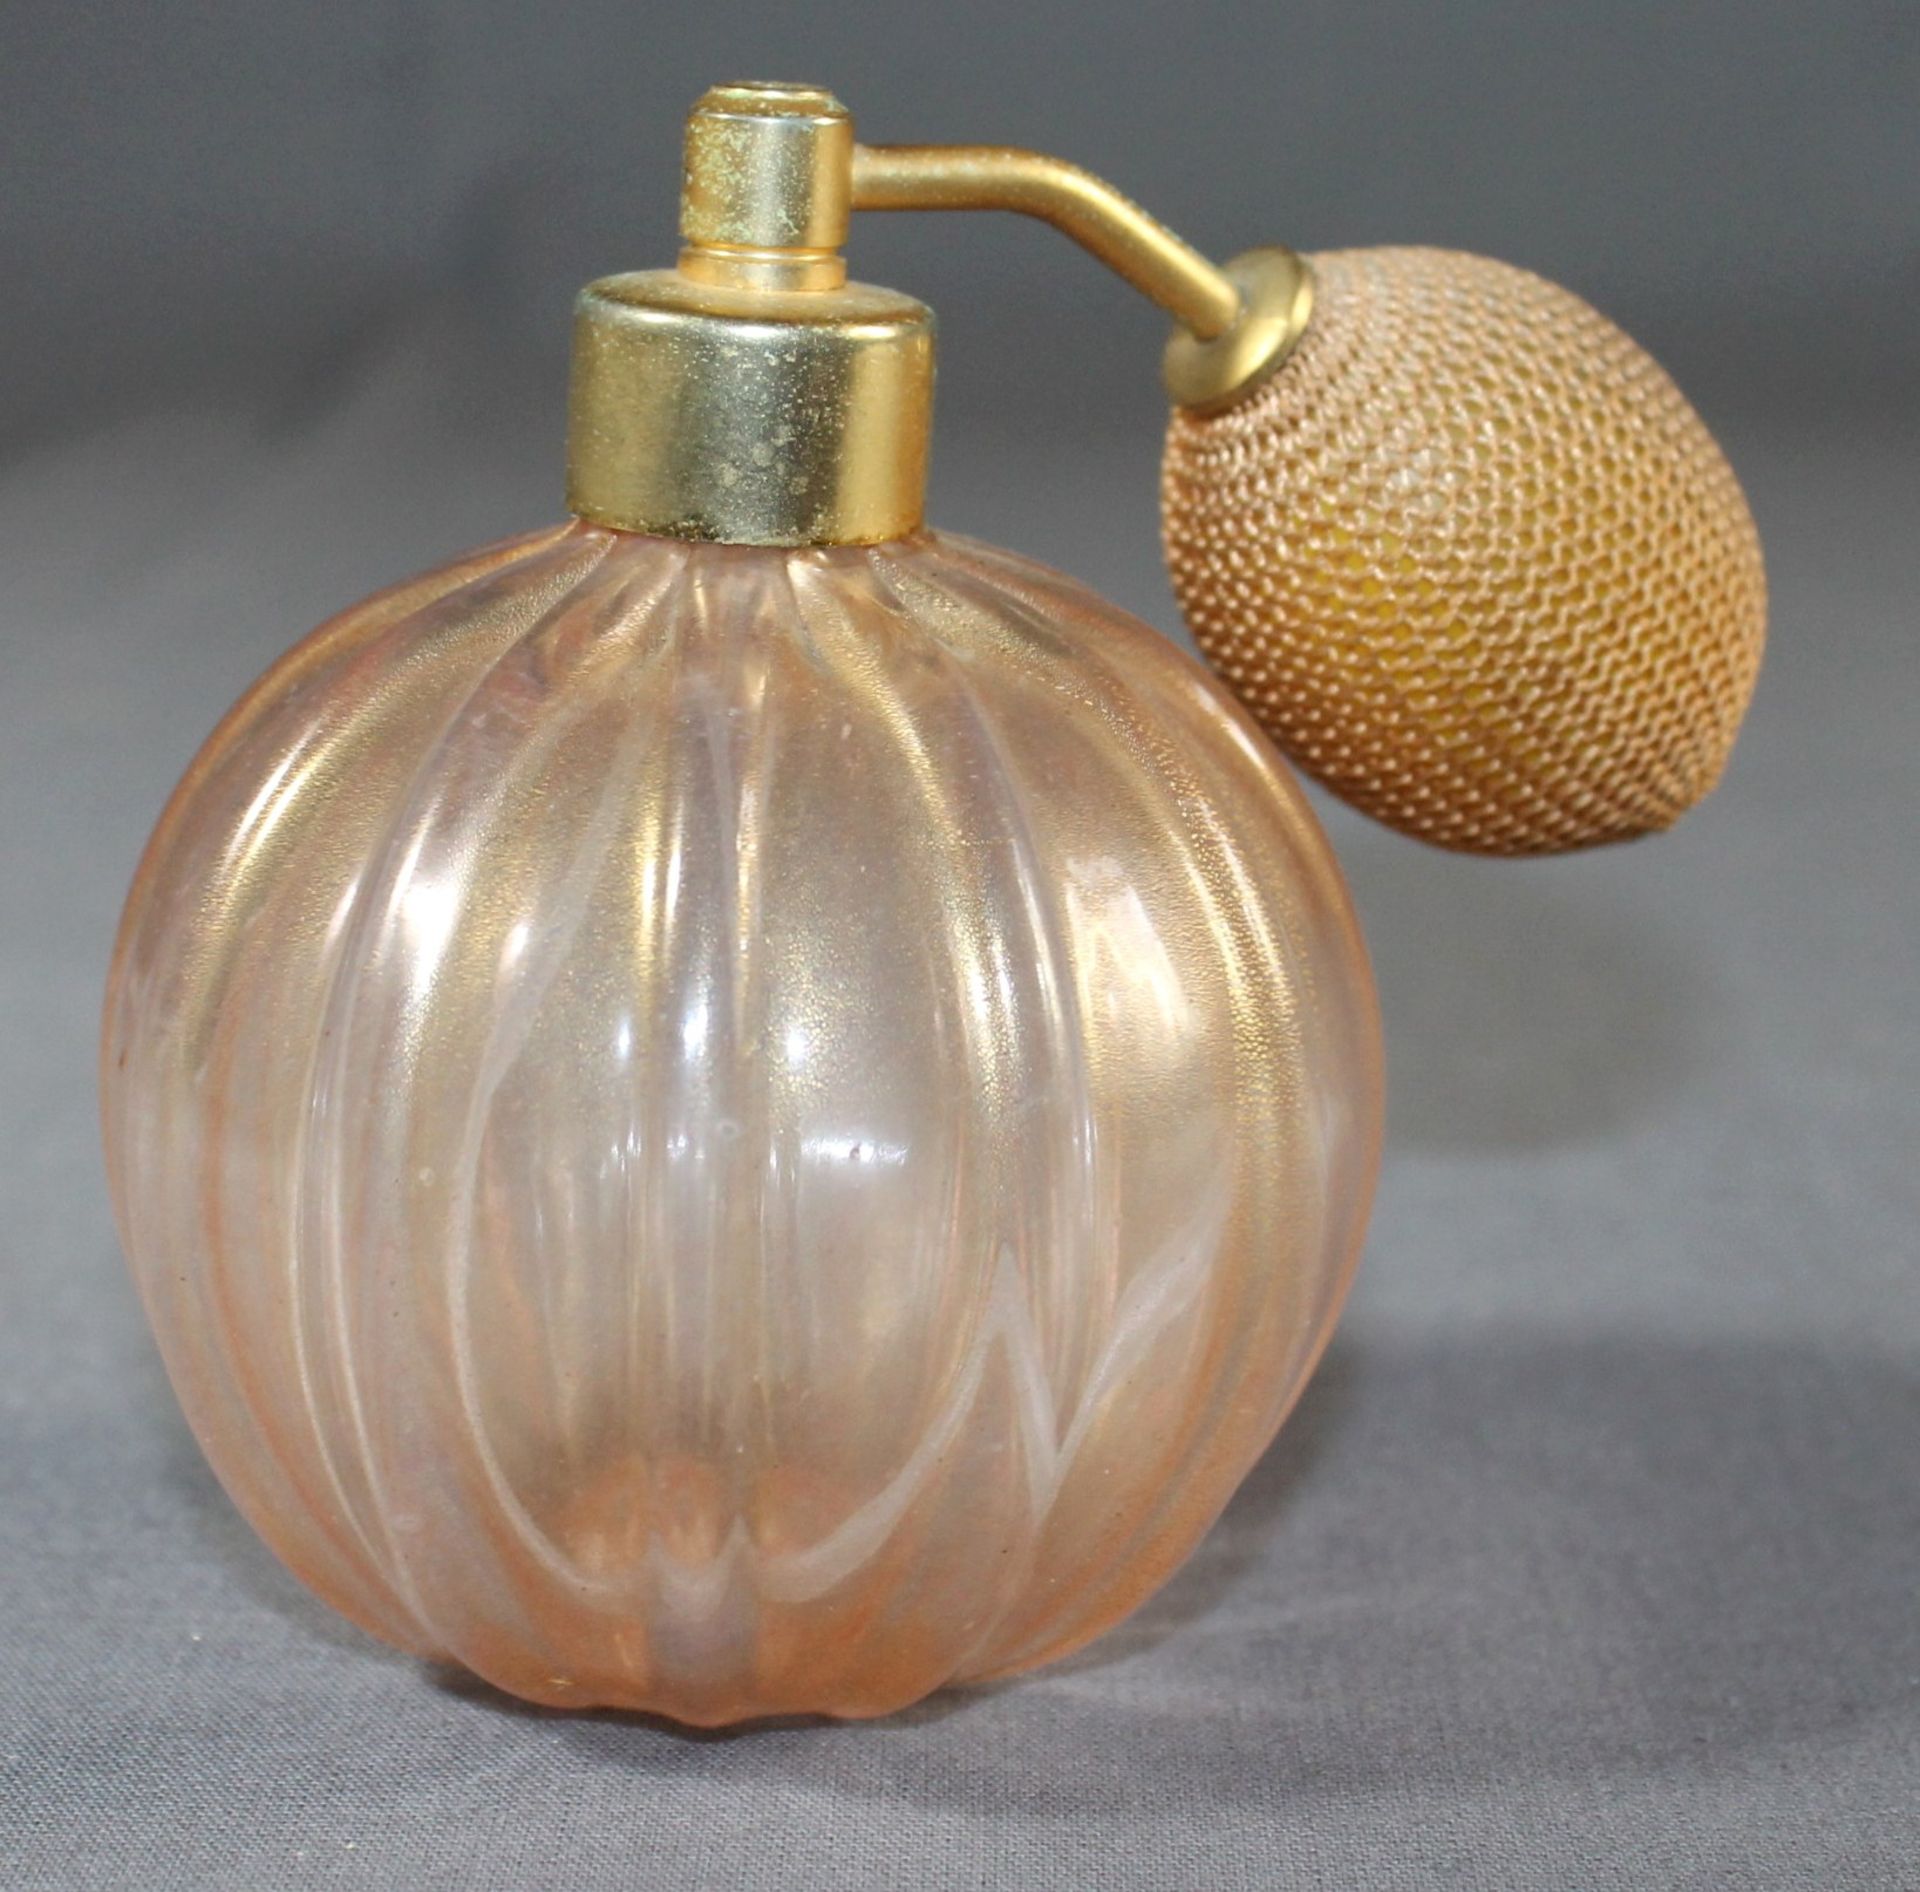 3 Parfumflacons Glas, Kugelform, gerippte Wandungen, rosa und farbloses Glas mit Goldfluss, H